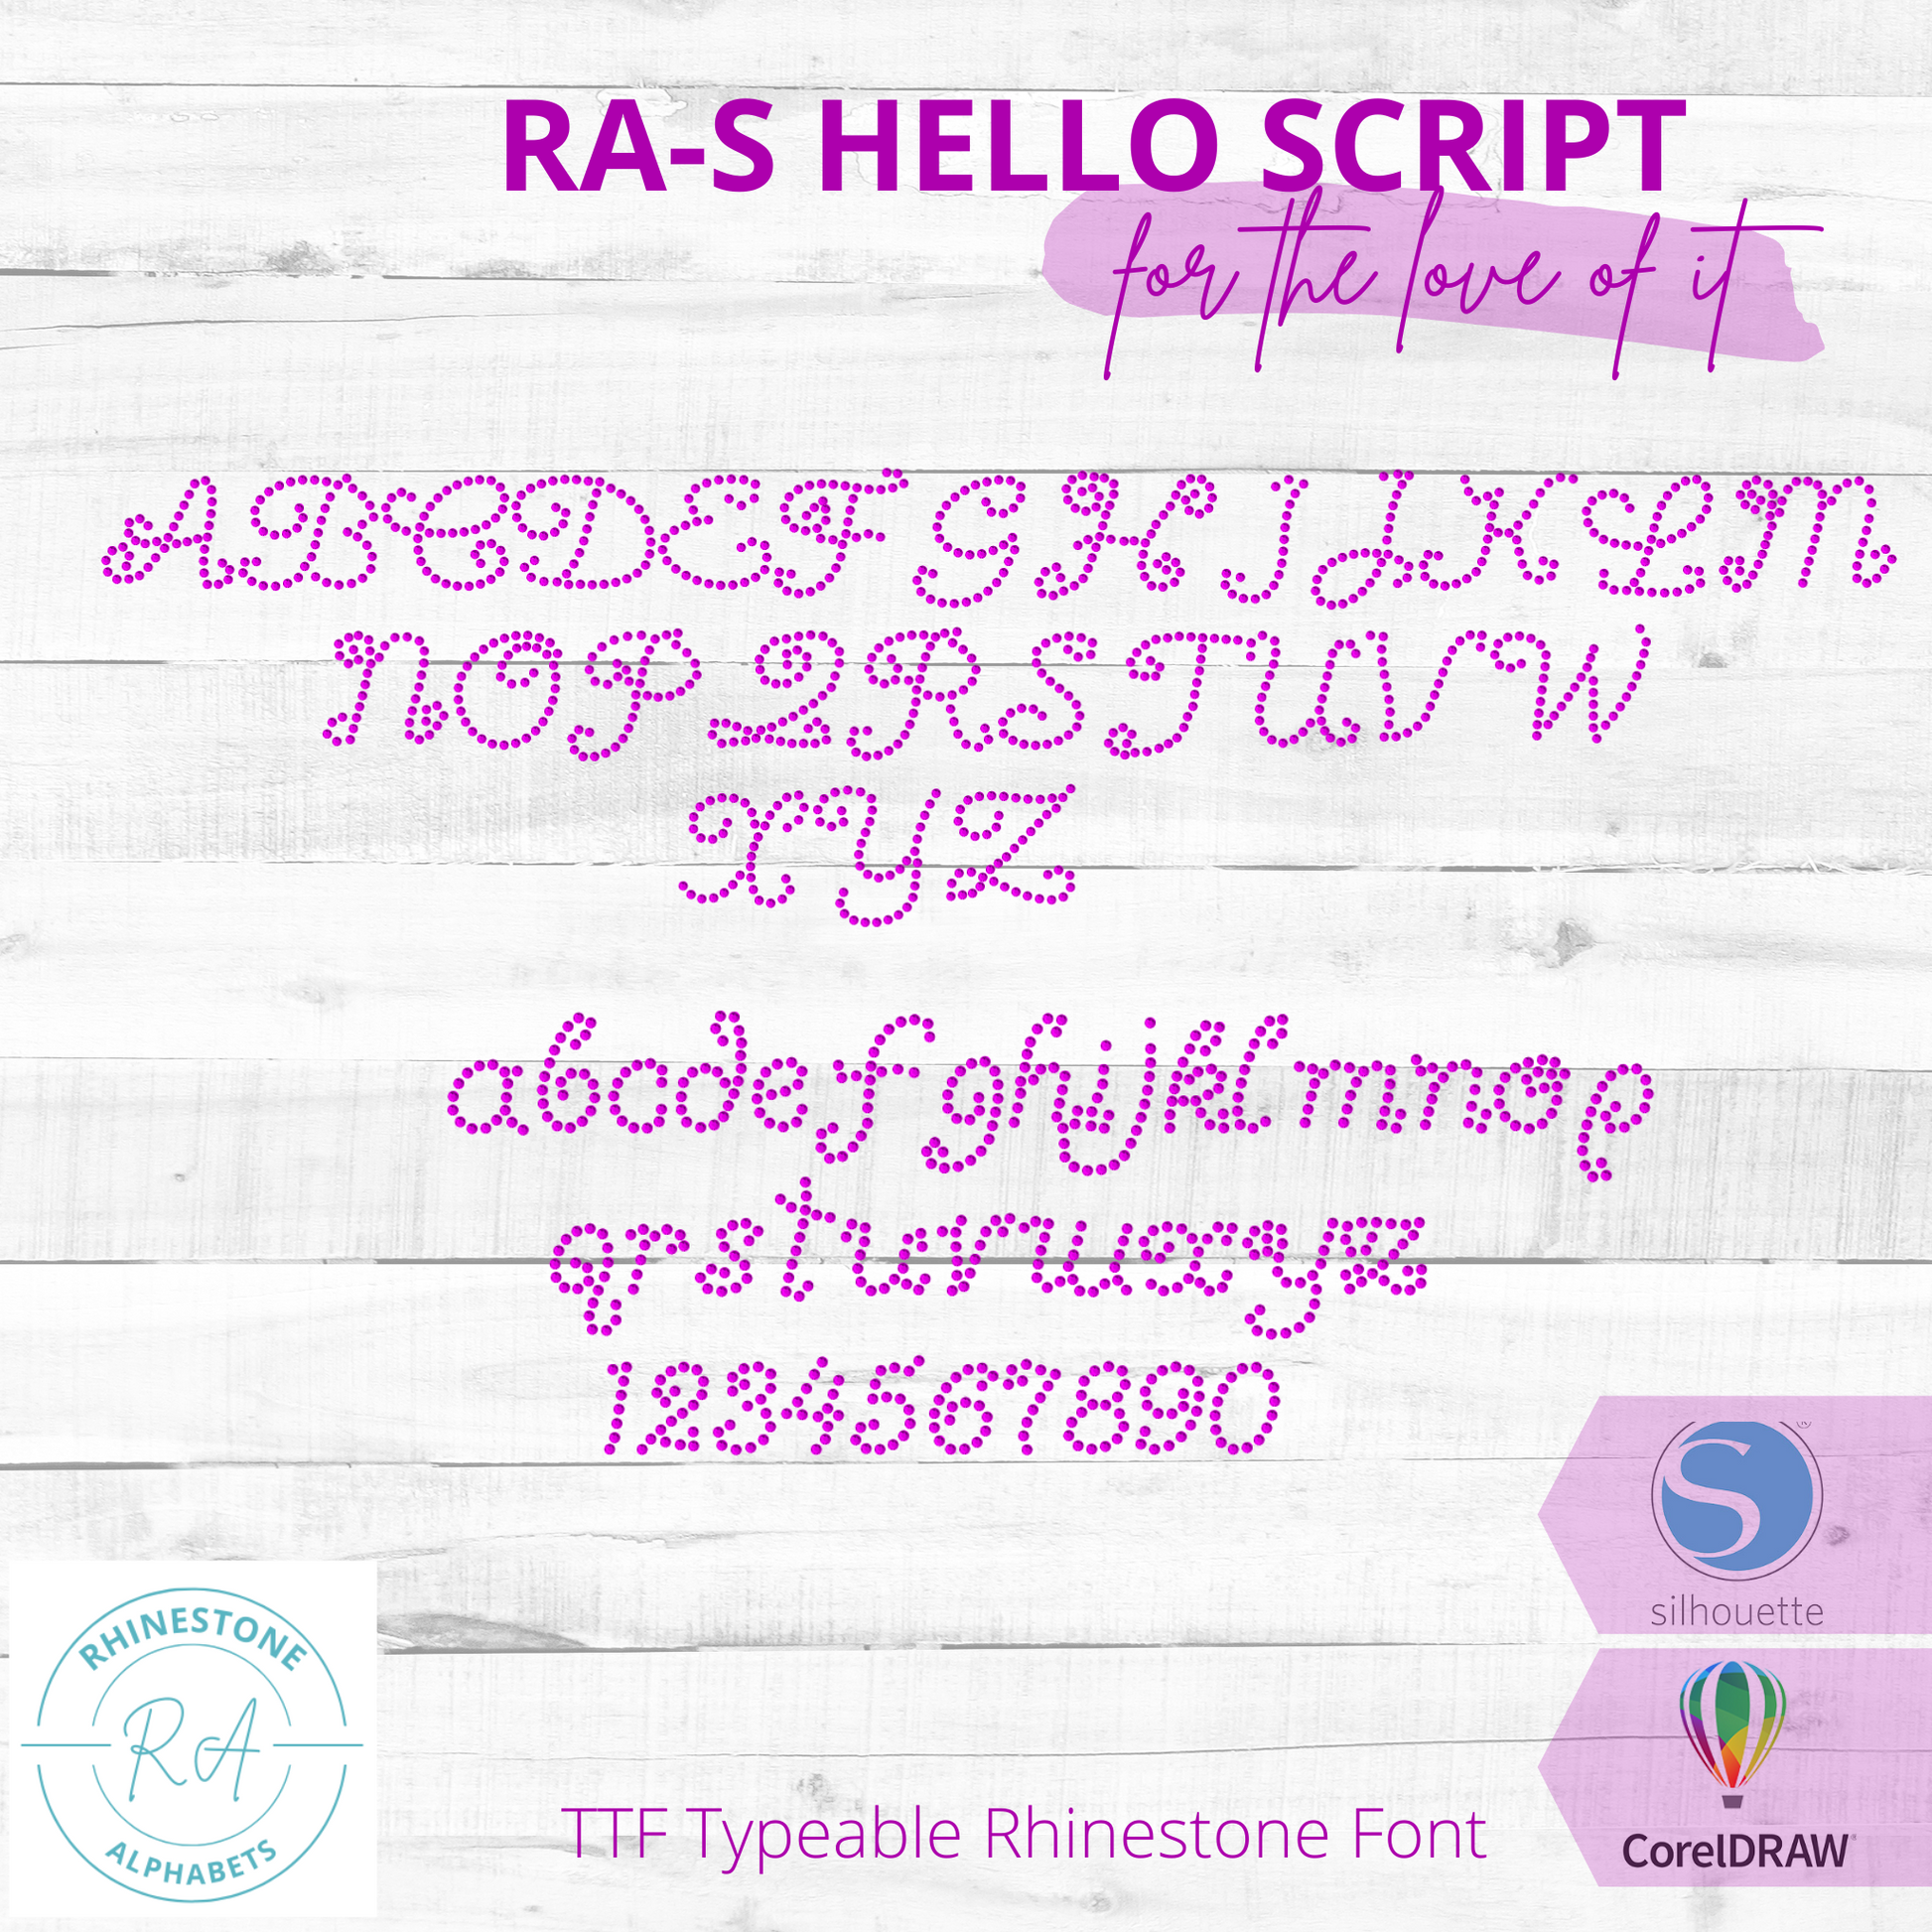 RA-S Hello Script - RhinestoneAlphabets